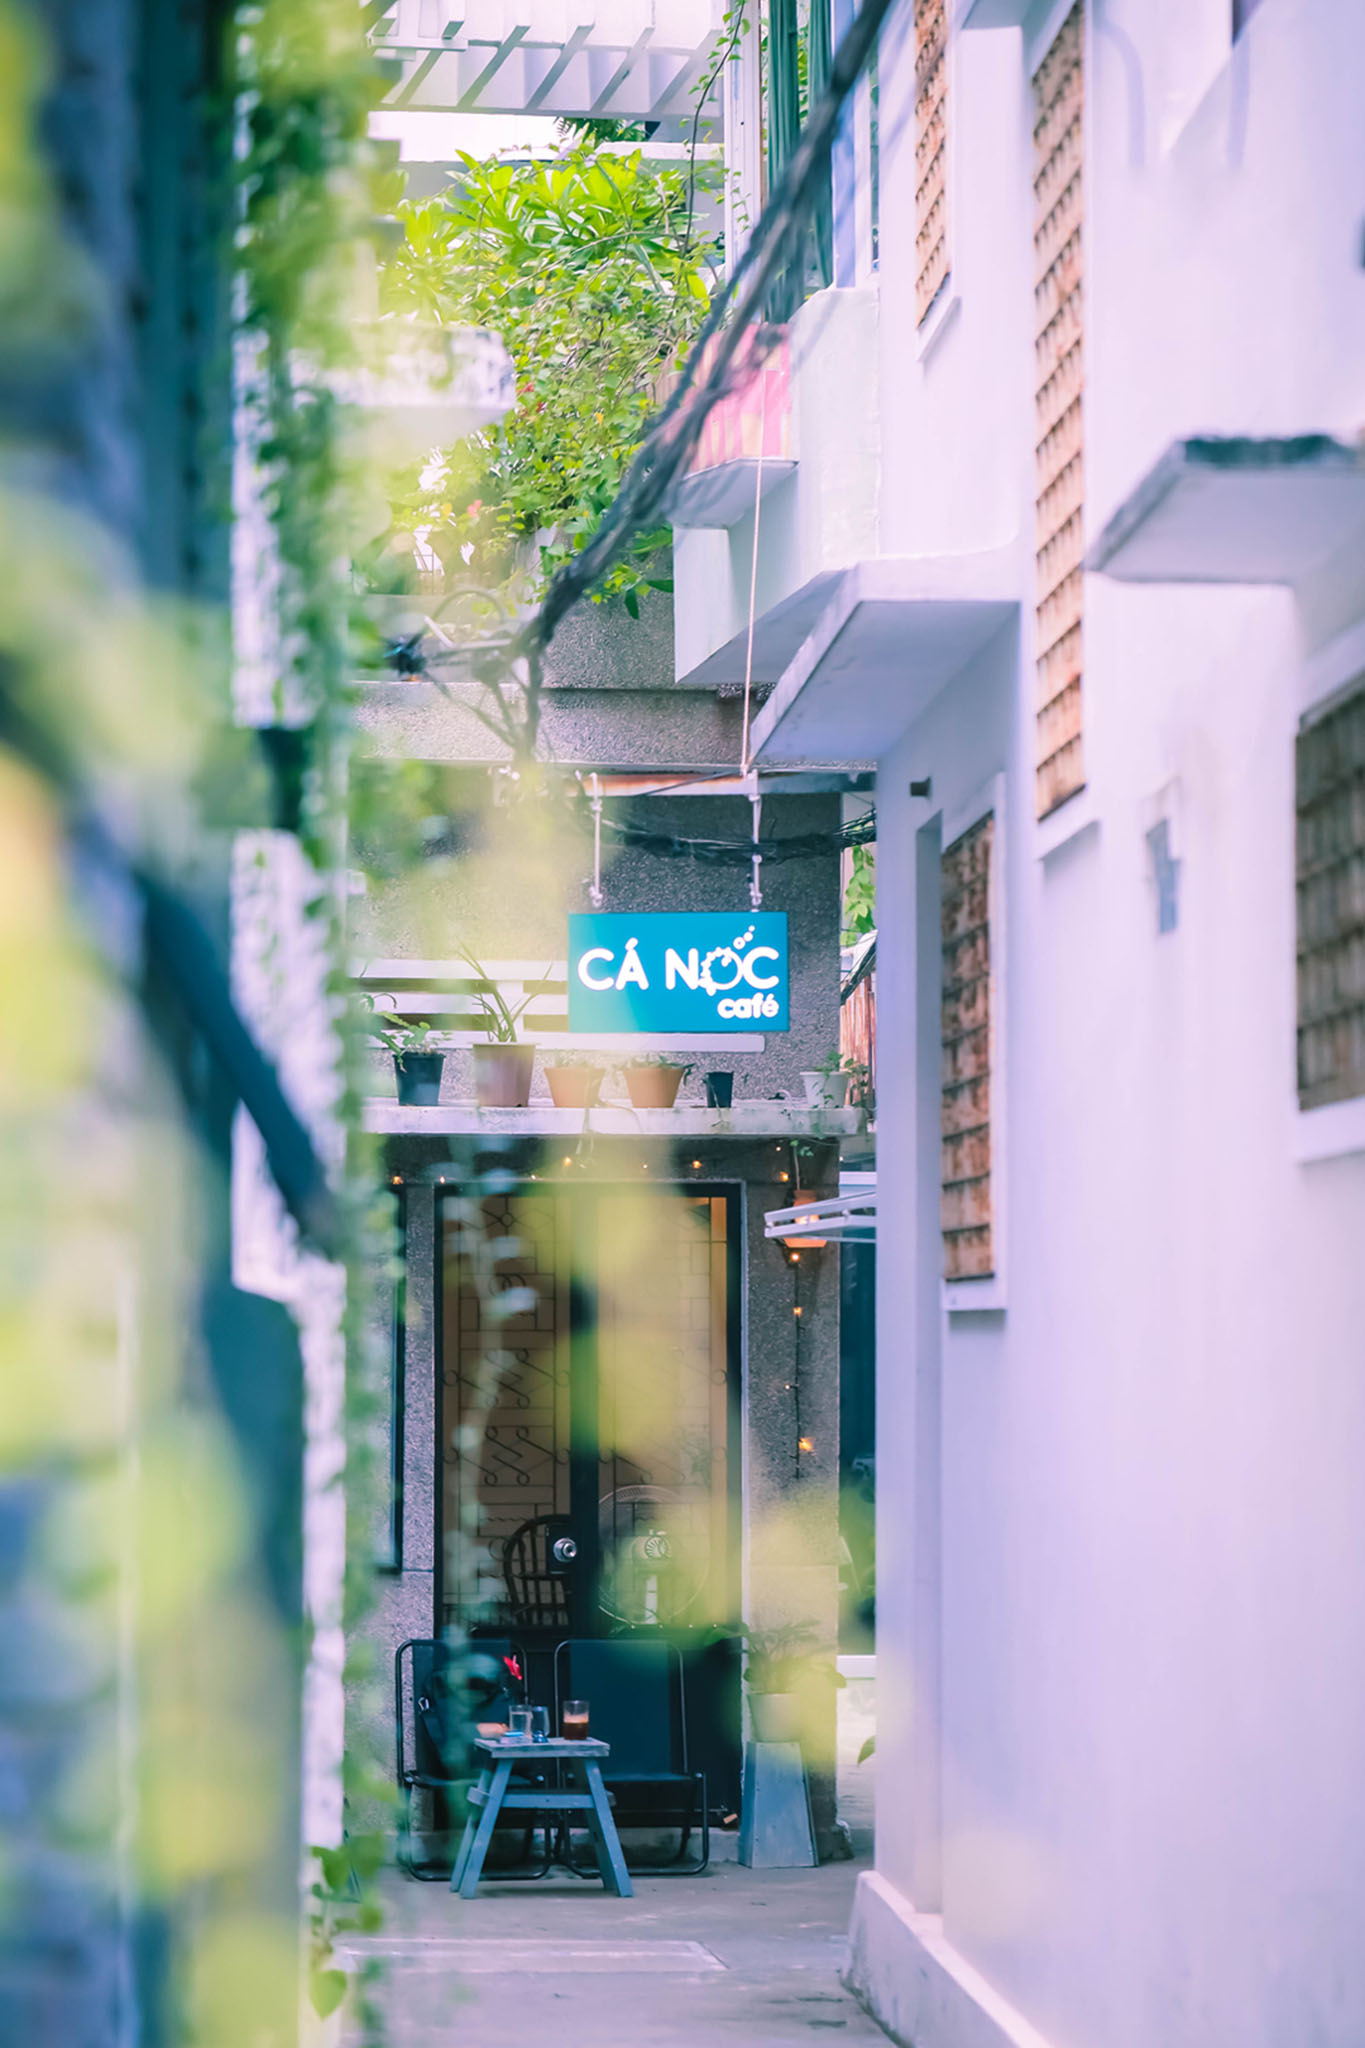 Ca Noc Cafe 50 2 Le Dinh Duong Hai Chau Da Nang Vietnam Tui Di Ca Phe Review